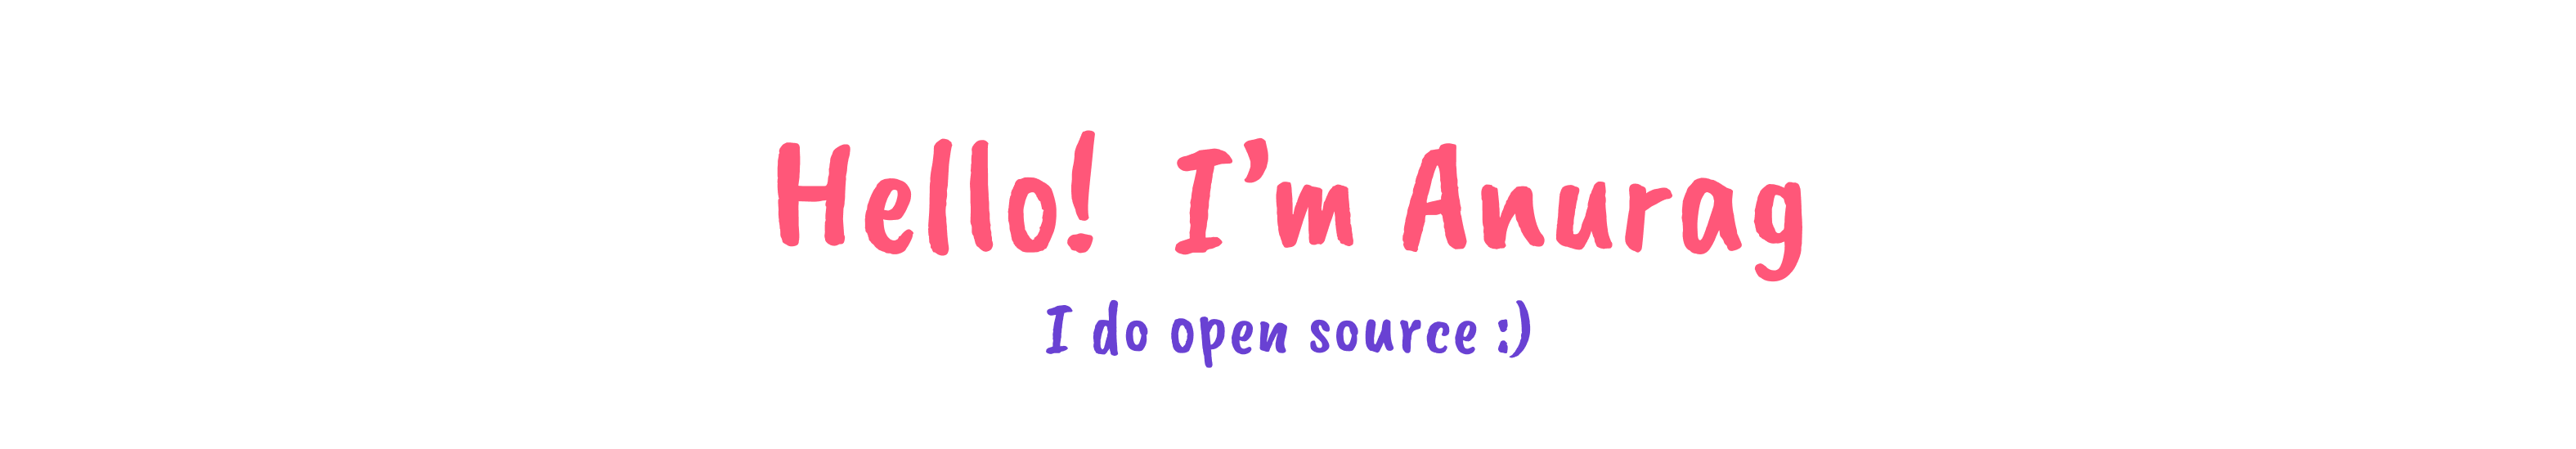 Hello, I'm Anurag. I do open source!